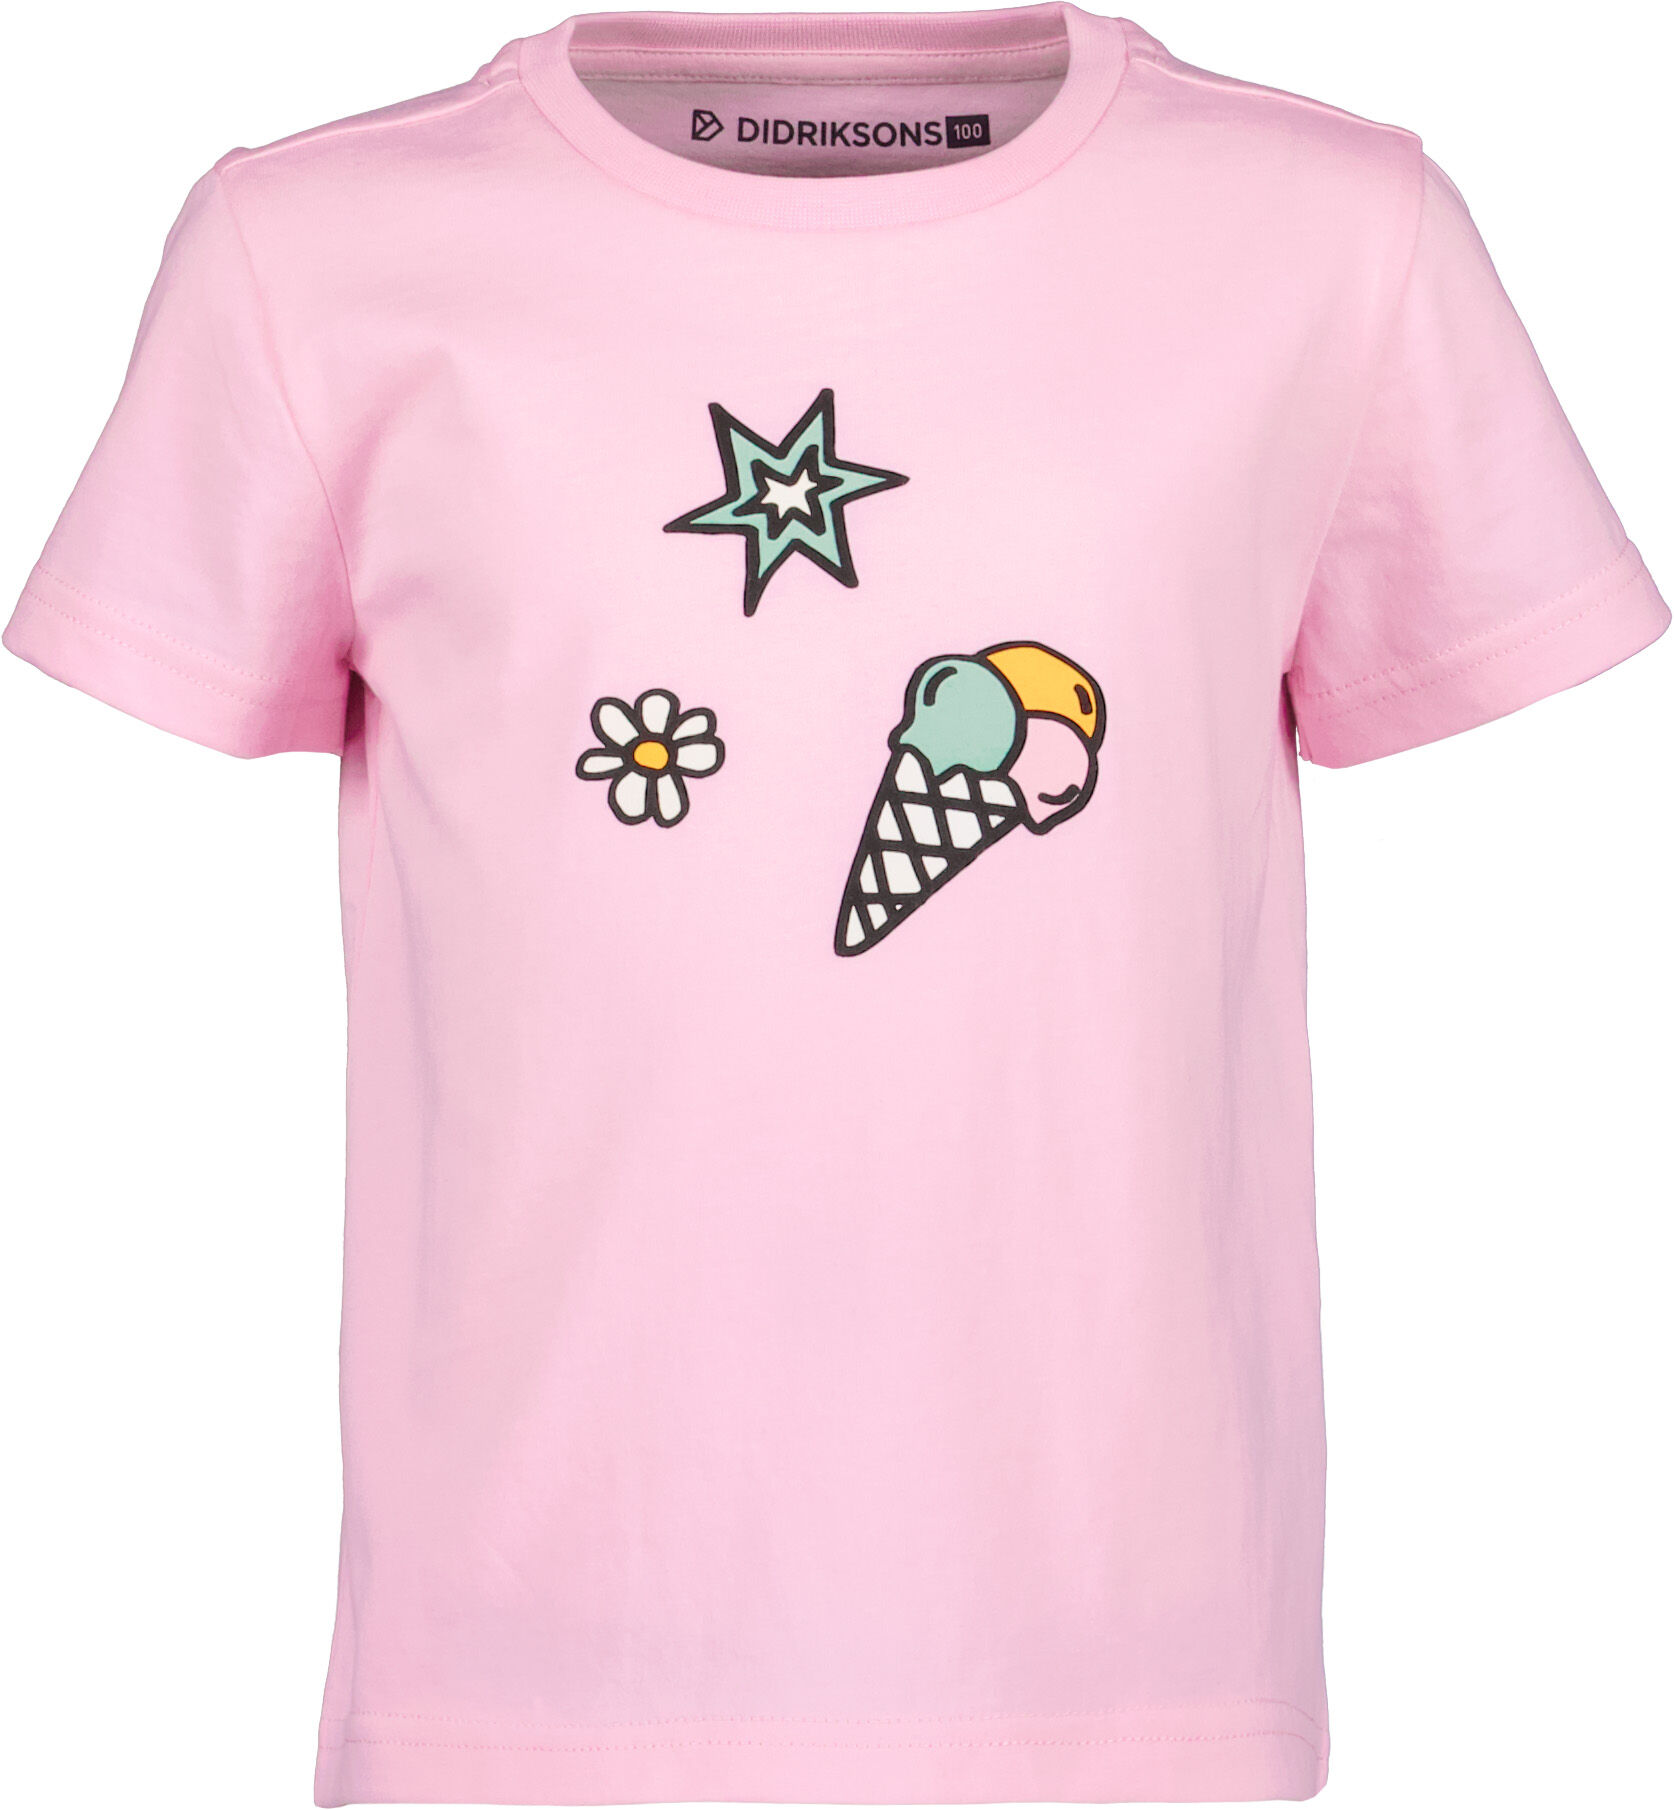 Didriksons Mynta T-shirt Orchid Pink 130